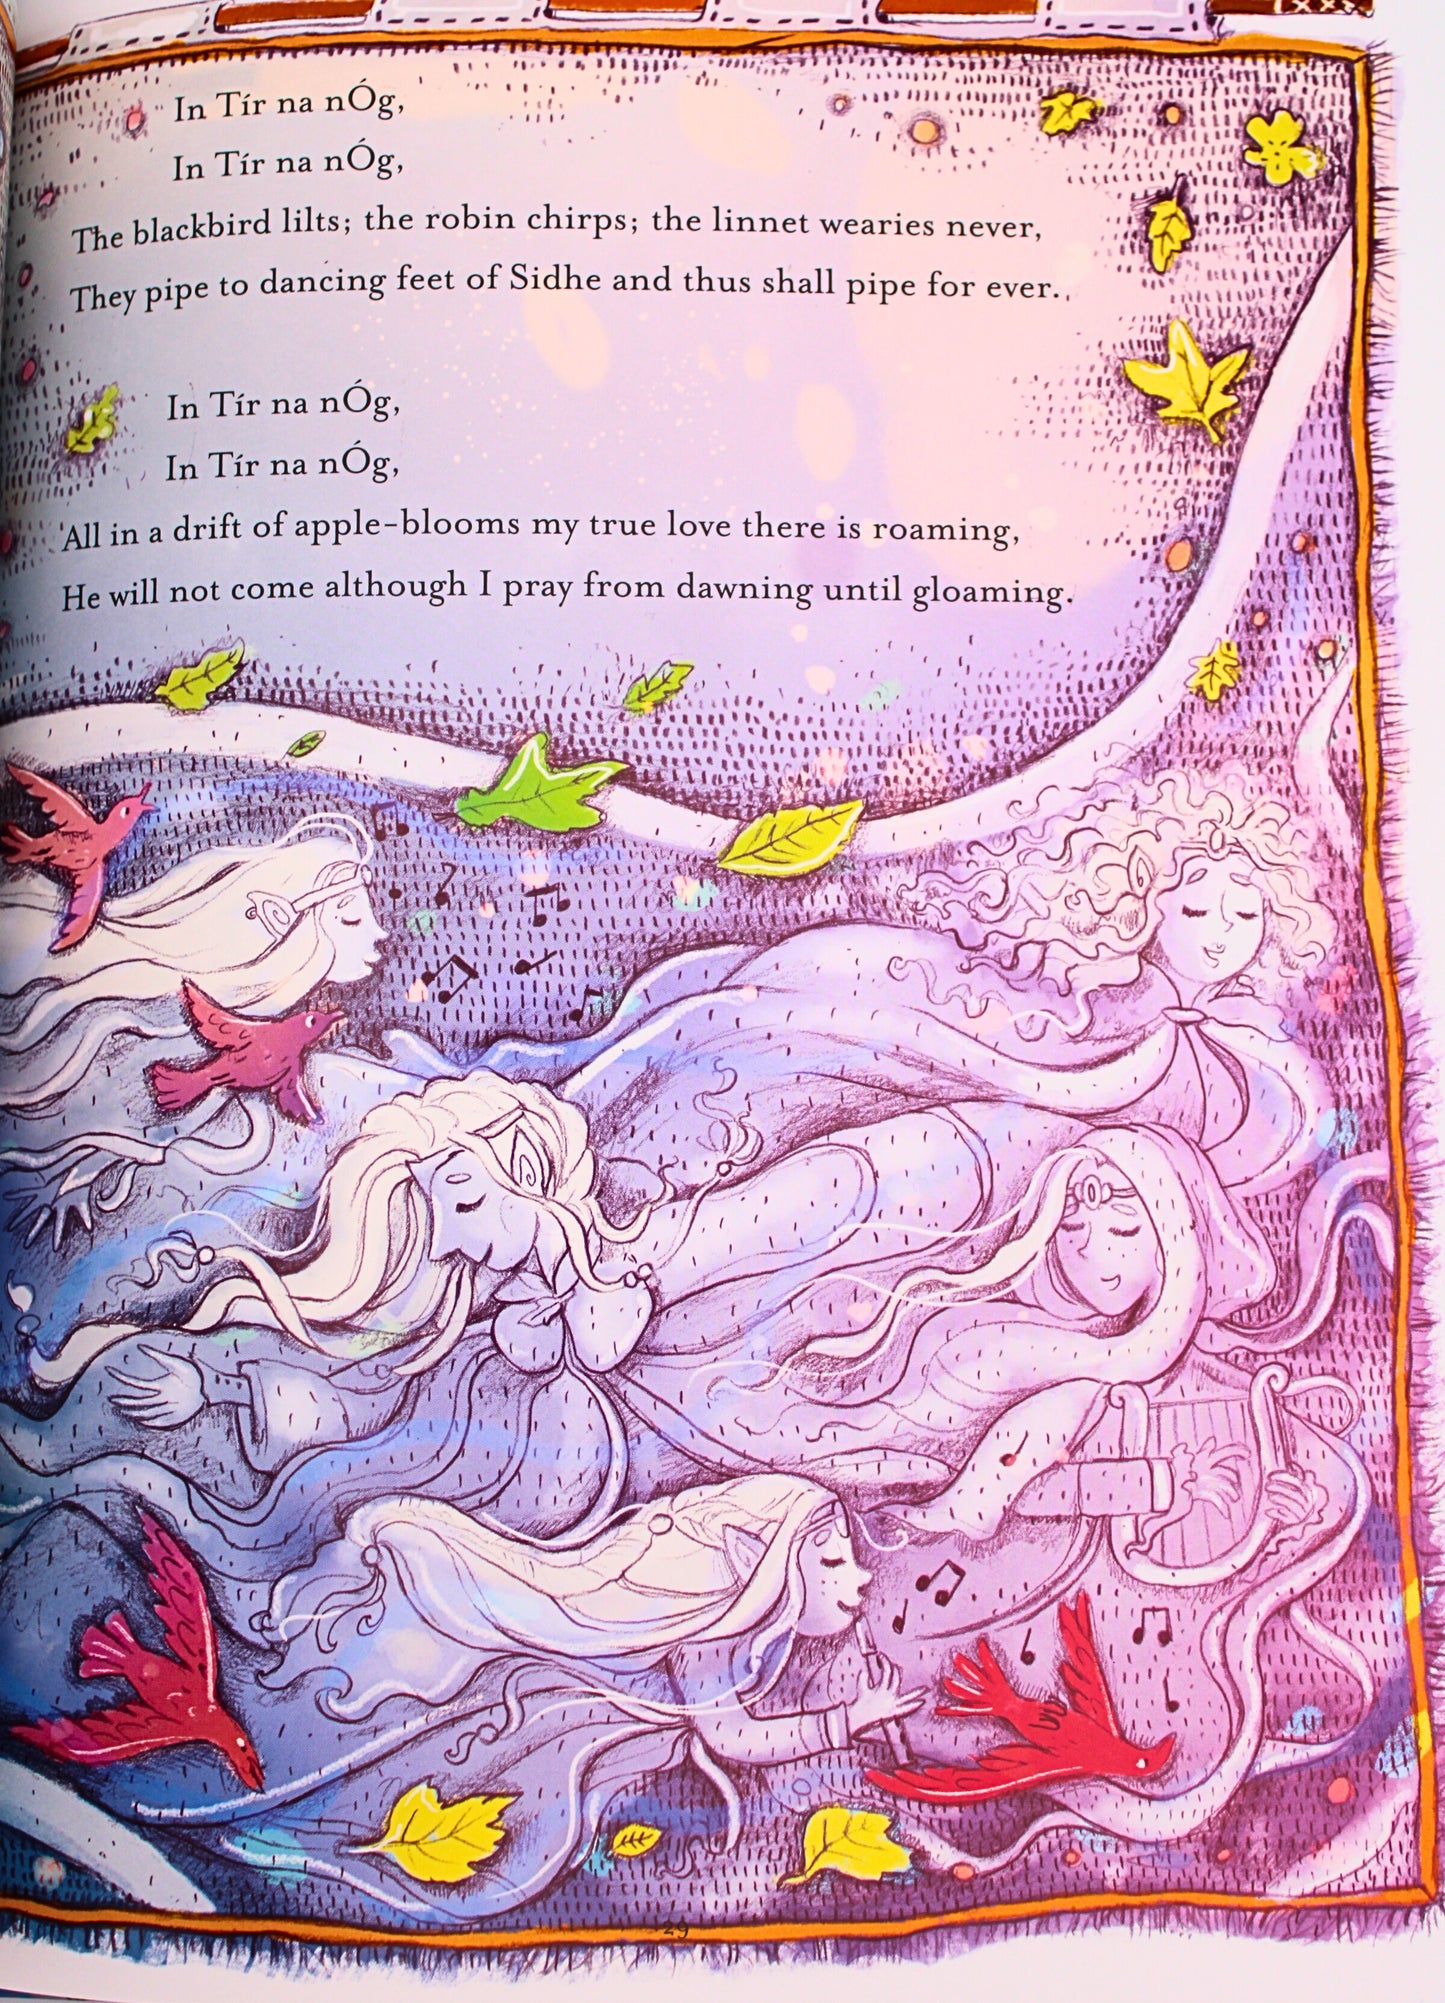 Illustrations from Tread Softly: Classic Irish Poems for Children